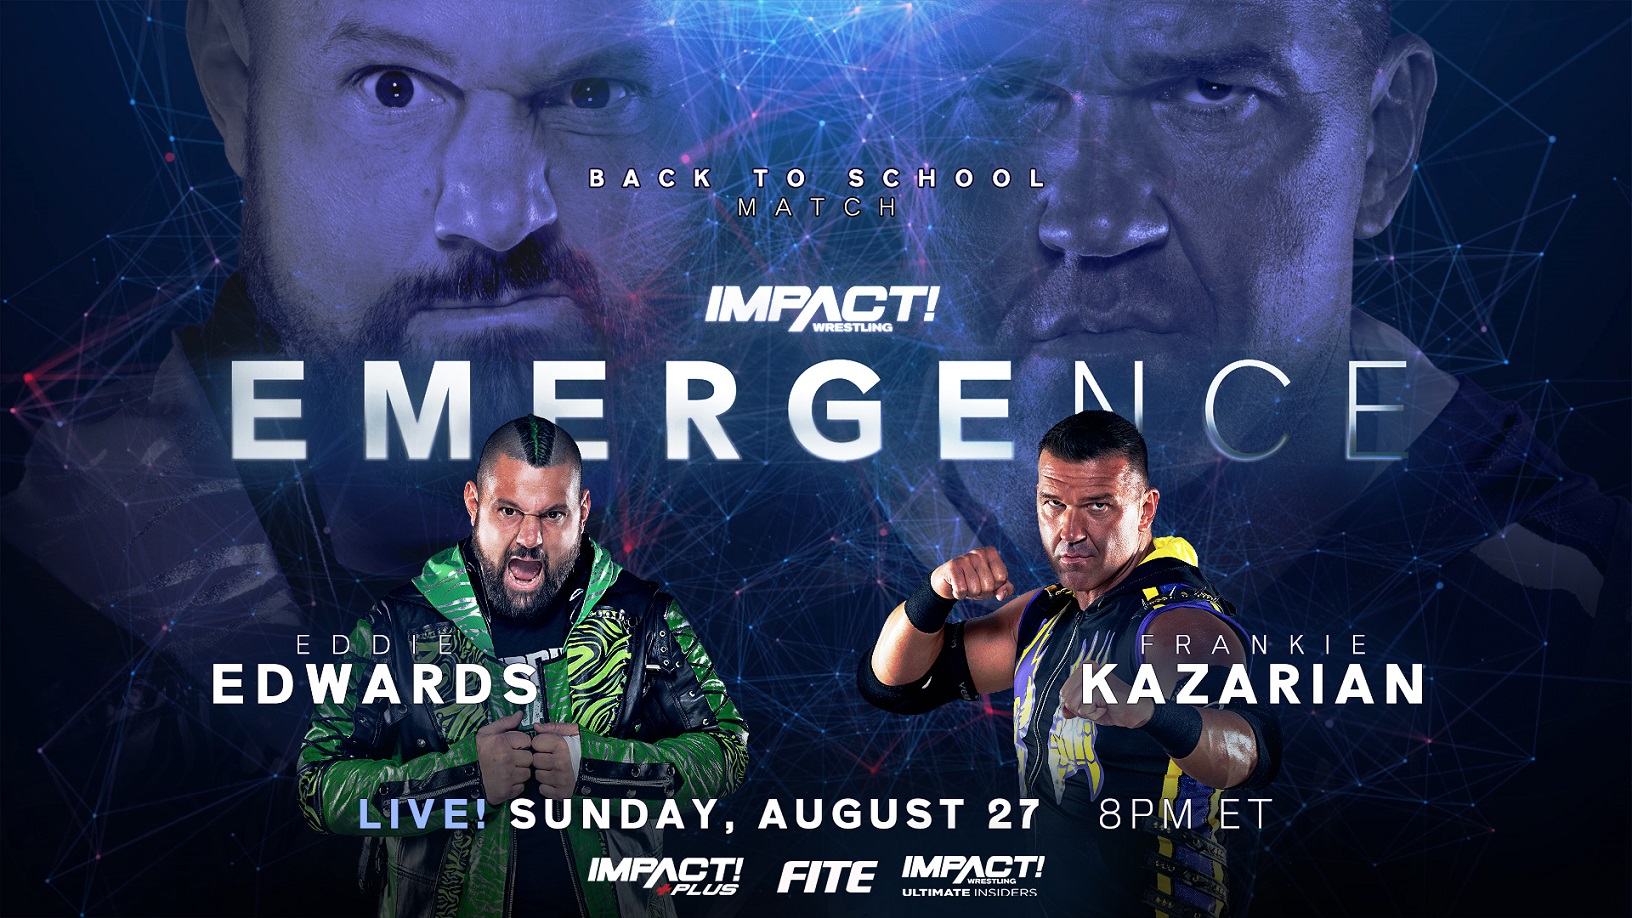 Eddie Edwards & Frankie Kazarian Go Back to School at Emergence – IMPACT Wrestling